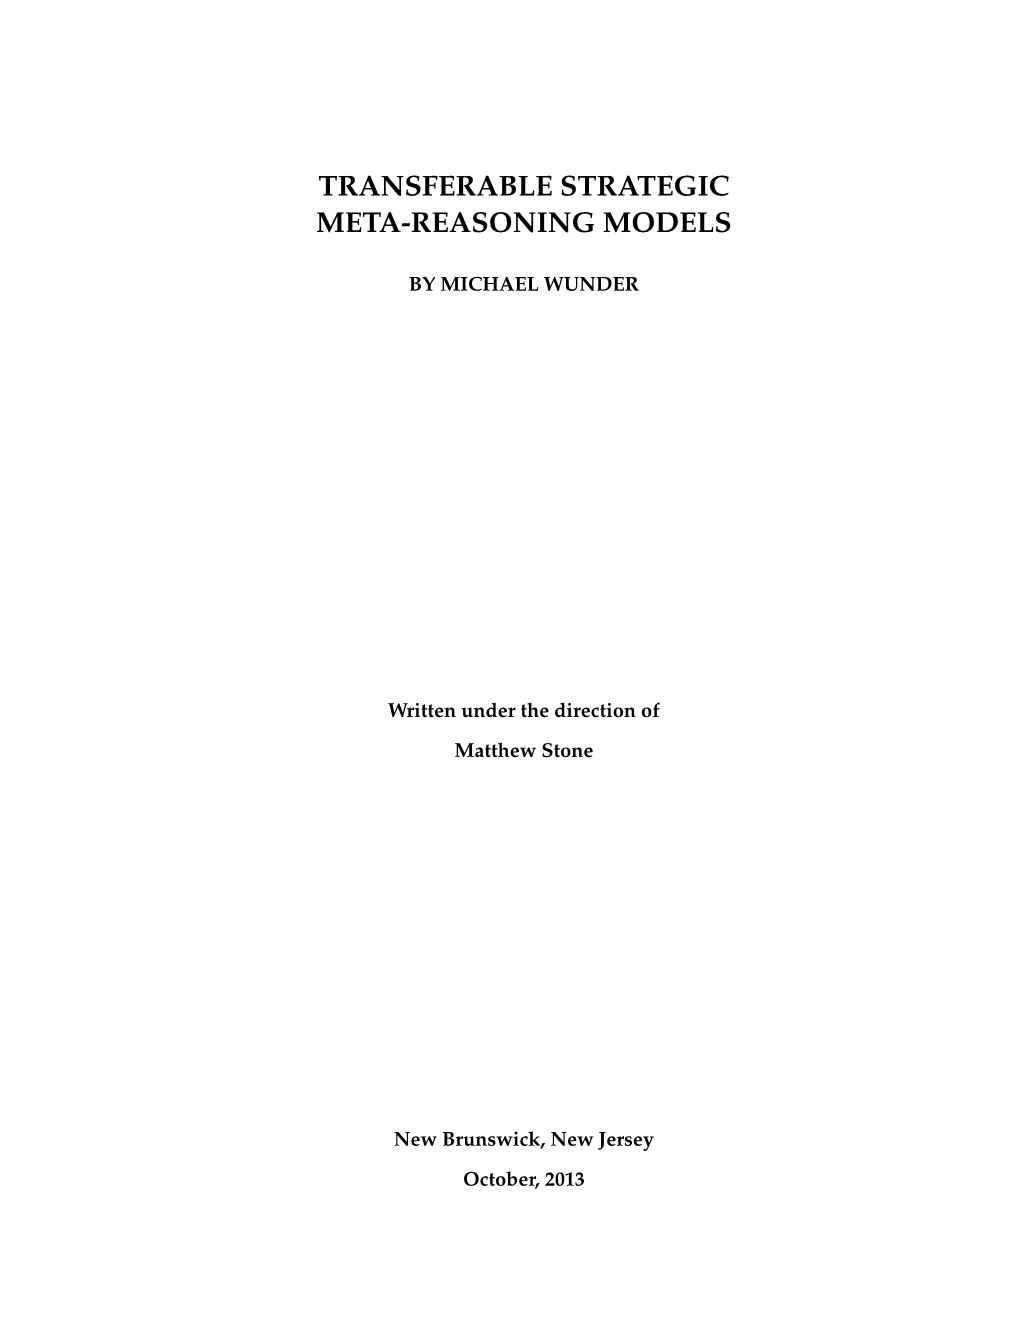 Transferable Strategic Meta-Reasoning Models